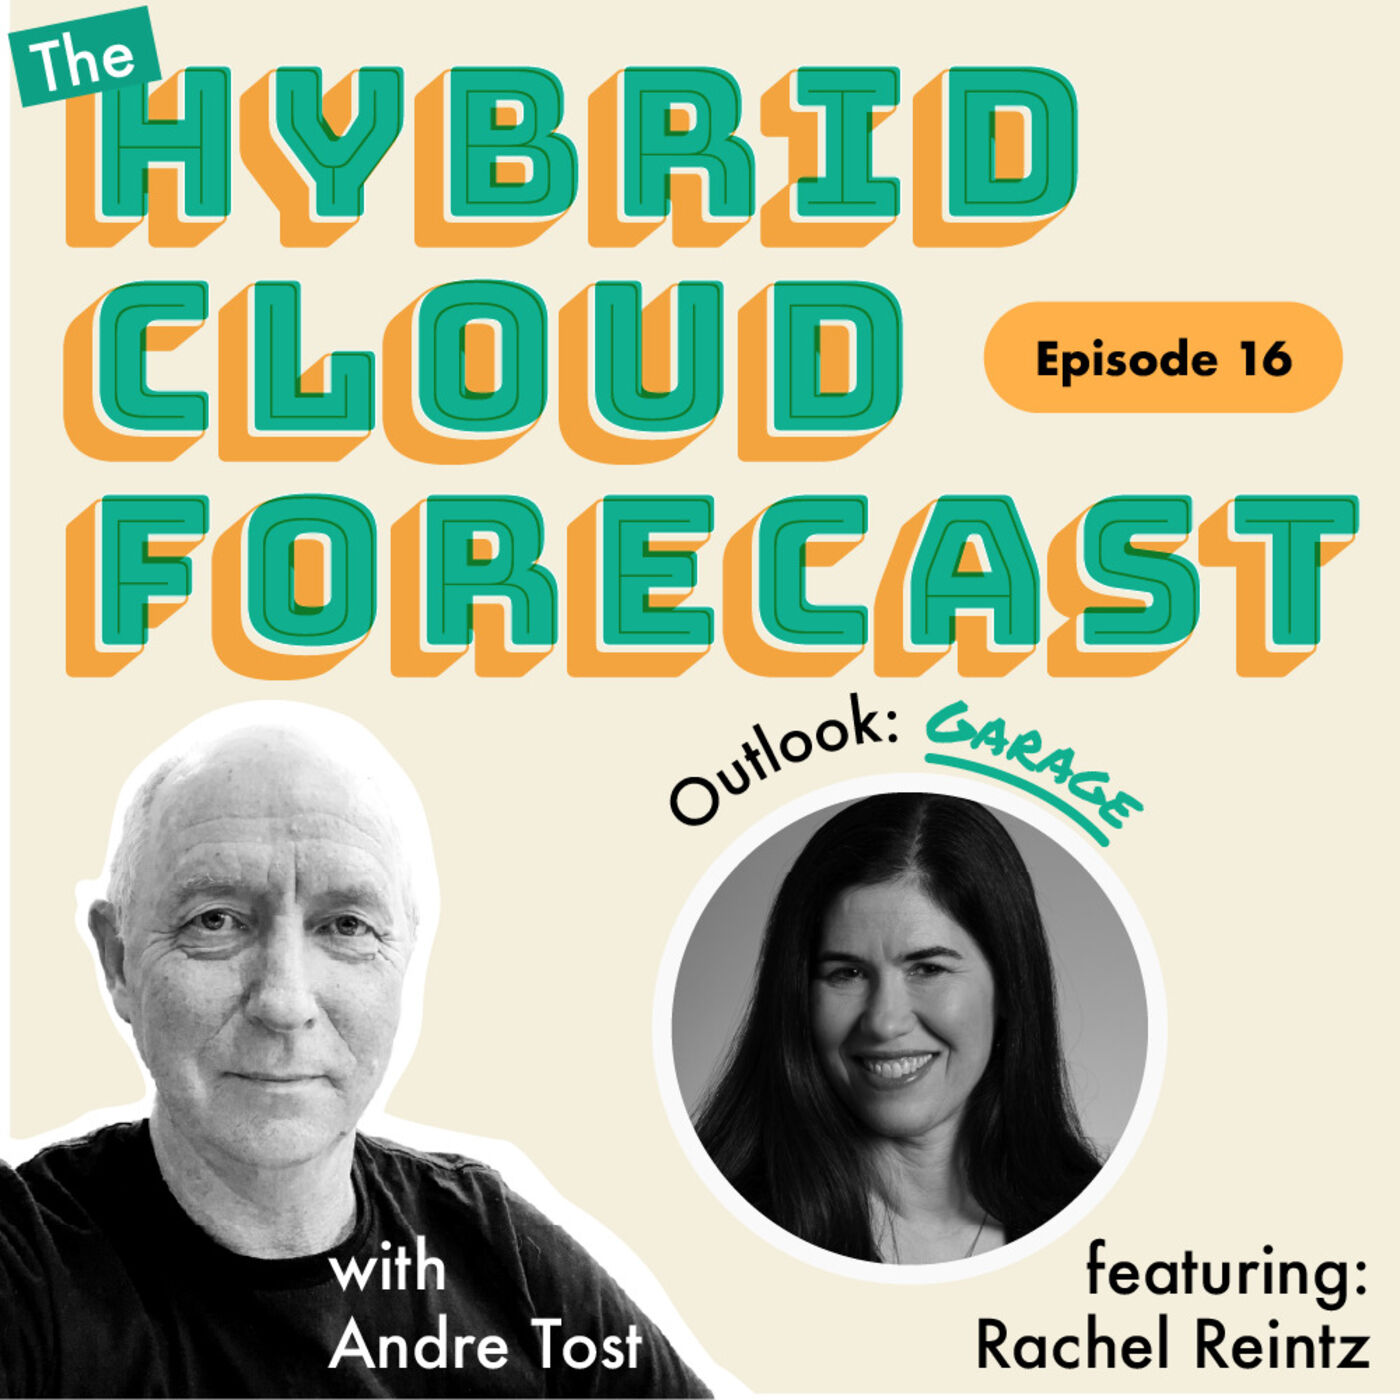 Episode 16: The Hybrid Cloud Forecast - Outlook: Garage